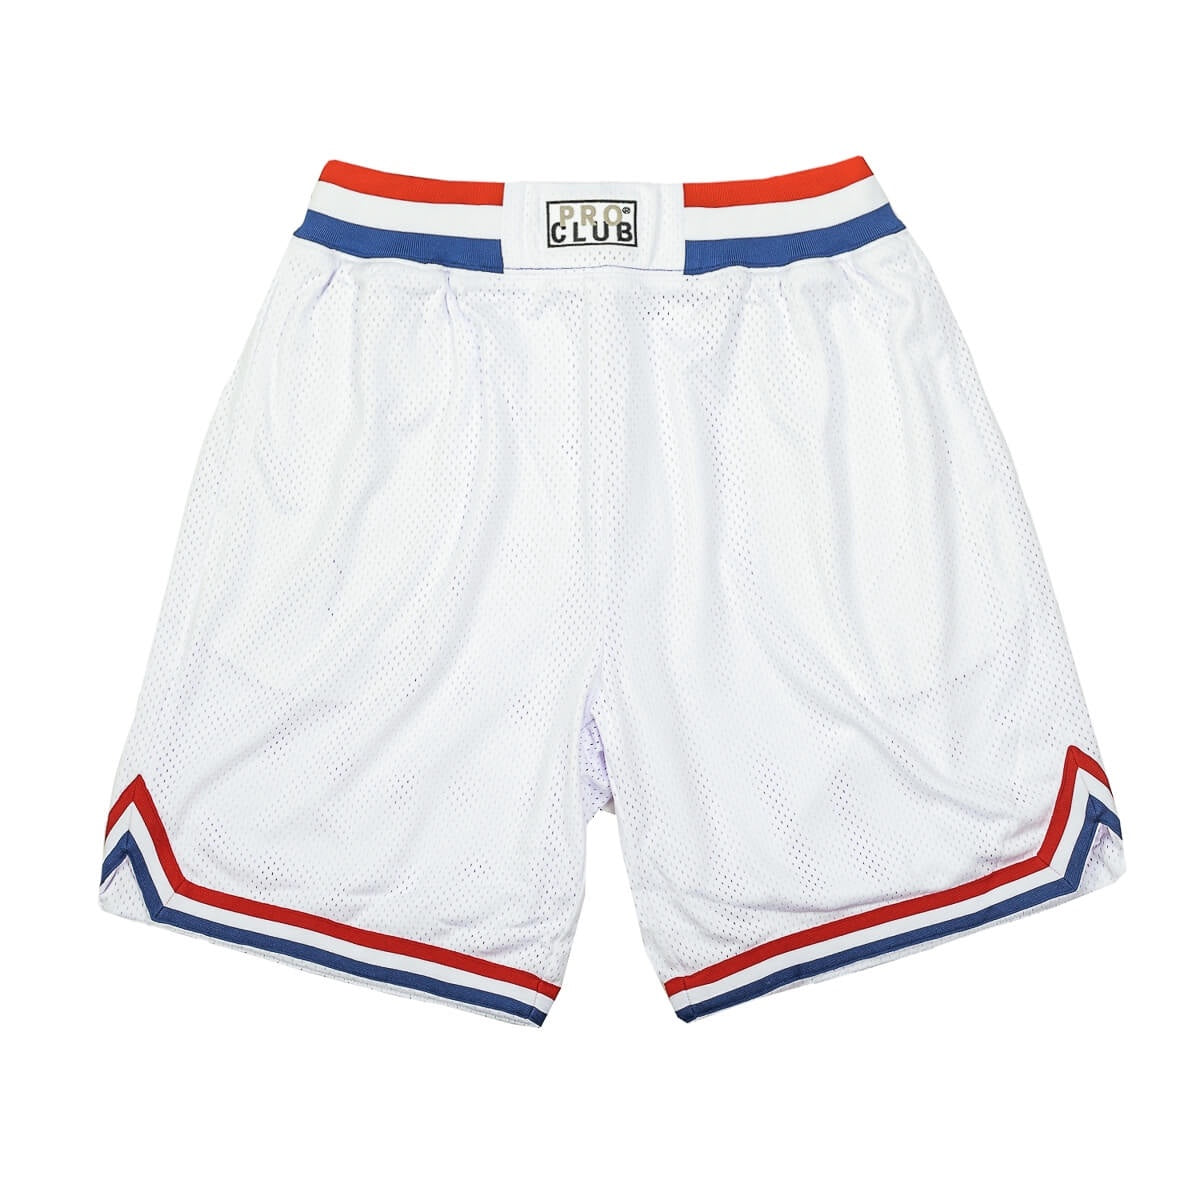 K1X  Kickz Hardwood Rev Practice Men's Reversible Shorts Basketball Pants  7401-0004/6100 Red/White